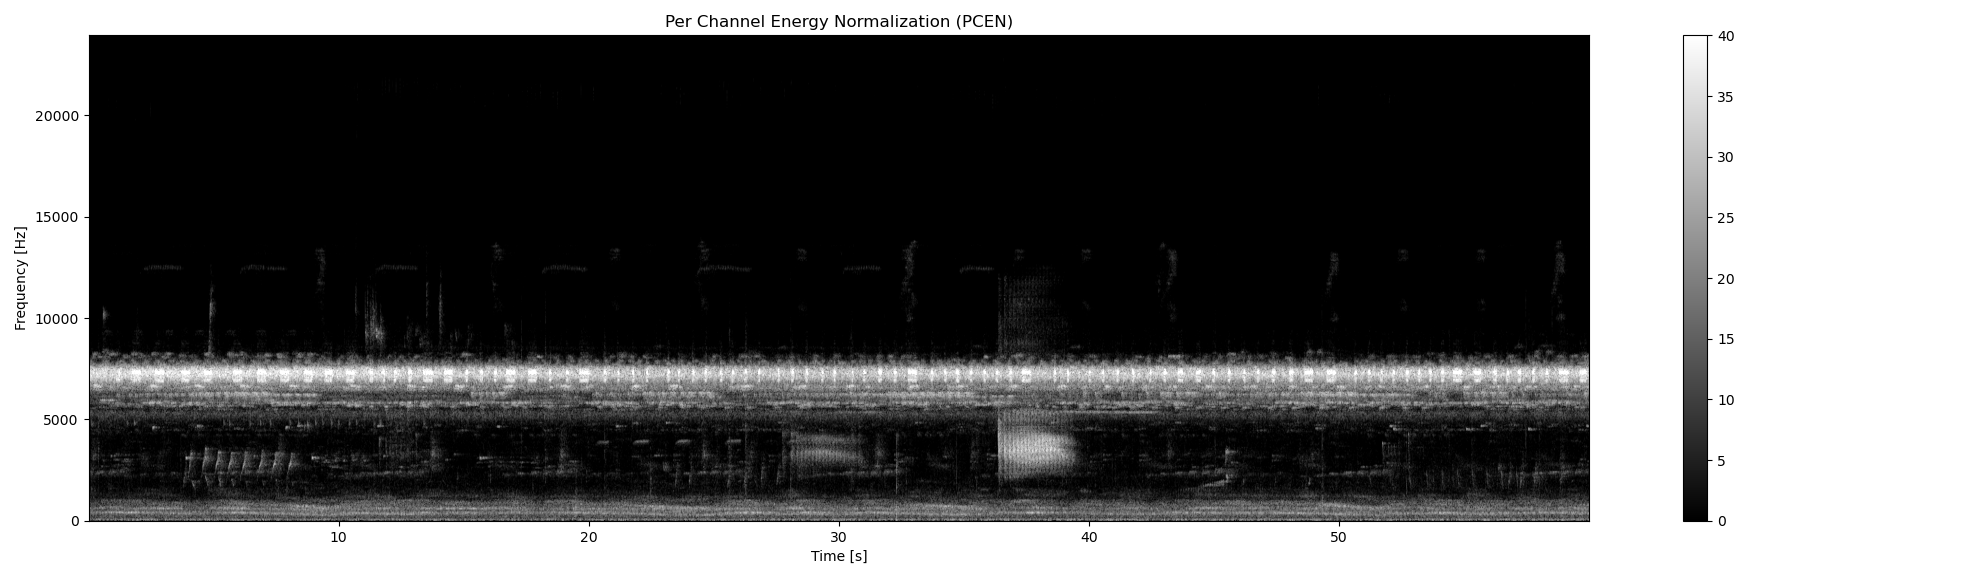 Per Channel Energy Normalization (PCEN)